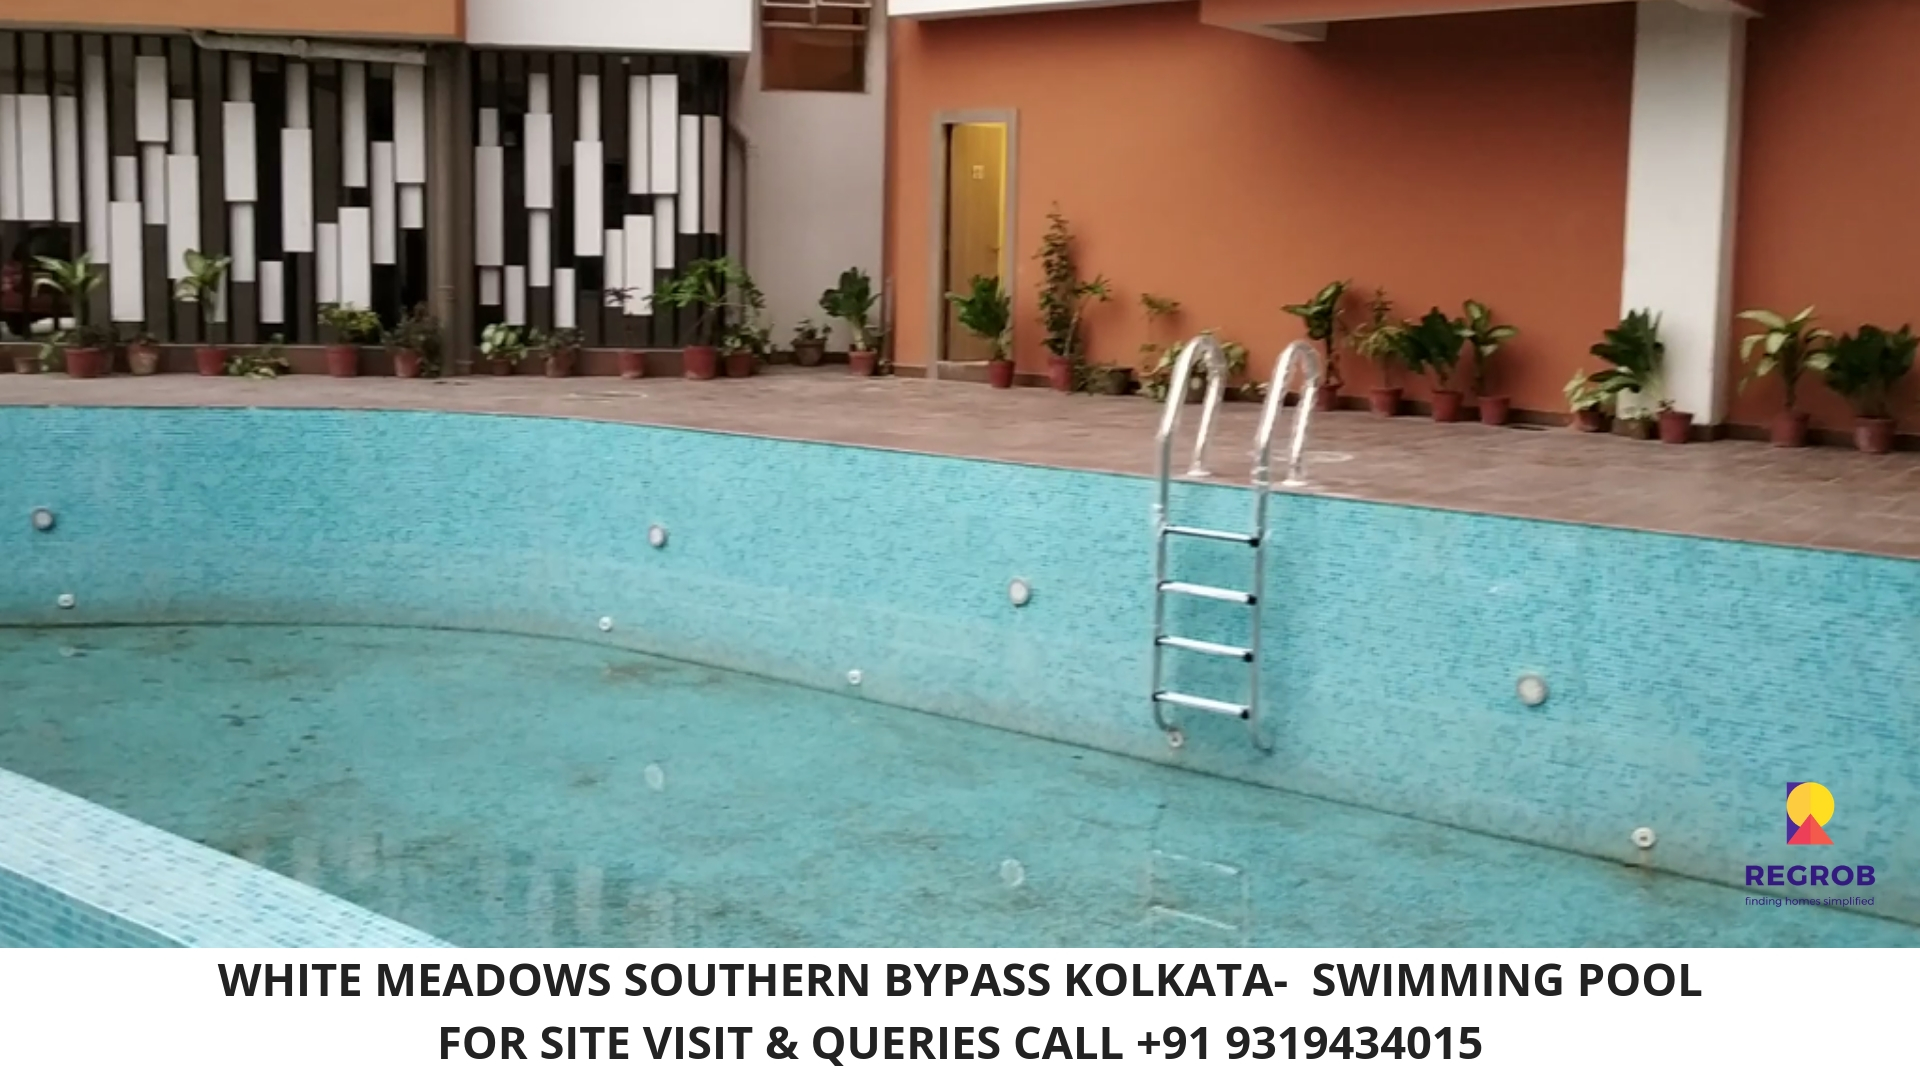 White Meadows Phase 2 Southern Bypass Kolkata